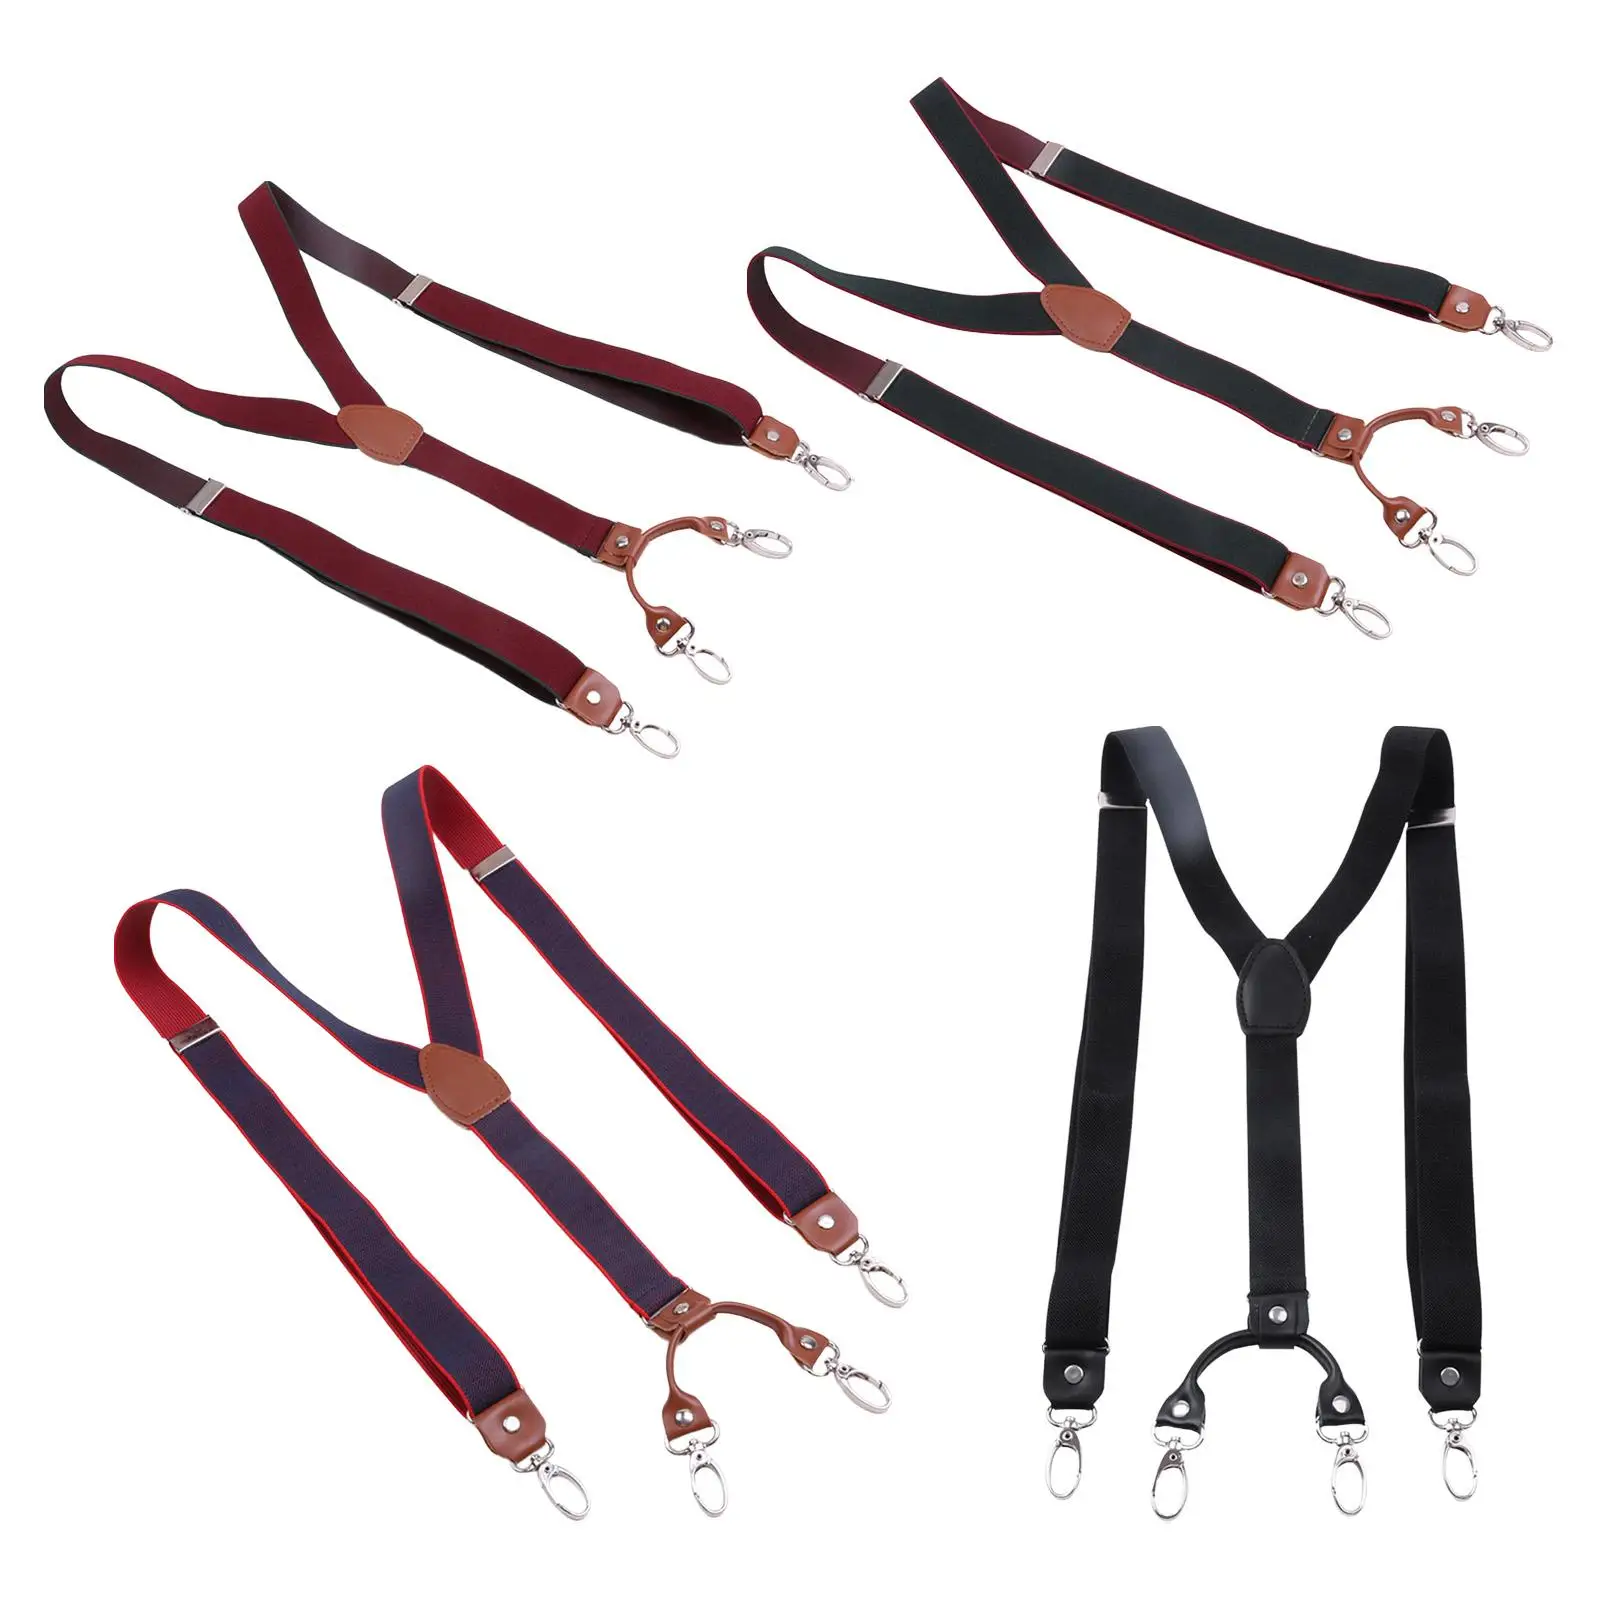 Suspenders for Men, Elastic Adjustable 4 Hooks Y Back Construction 1 inch Wide Belt Loops Pants  for Work Casual Accessories